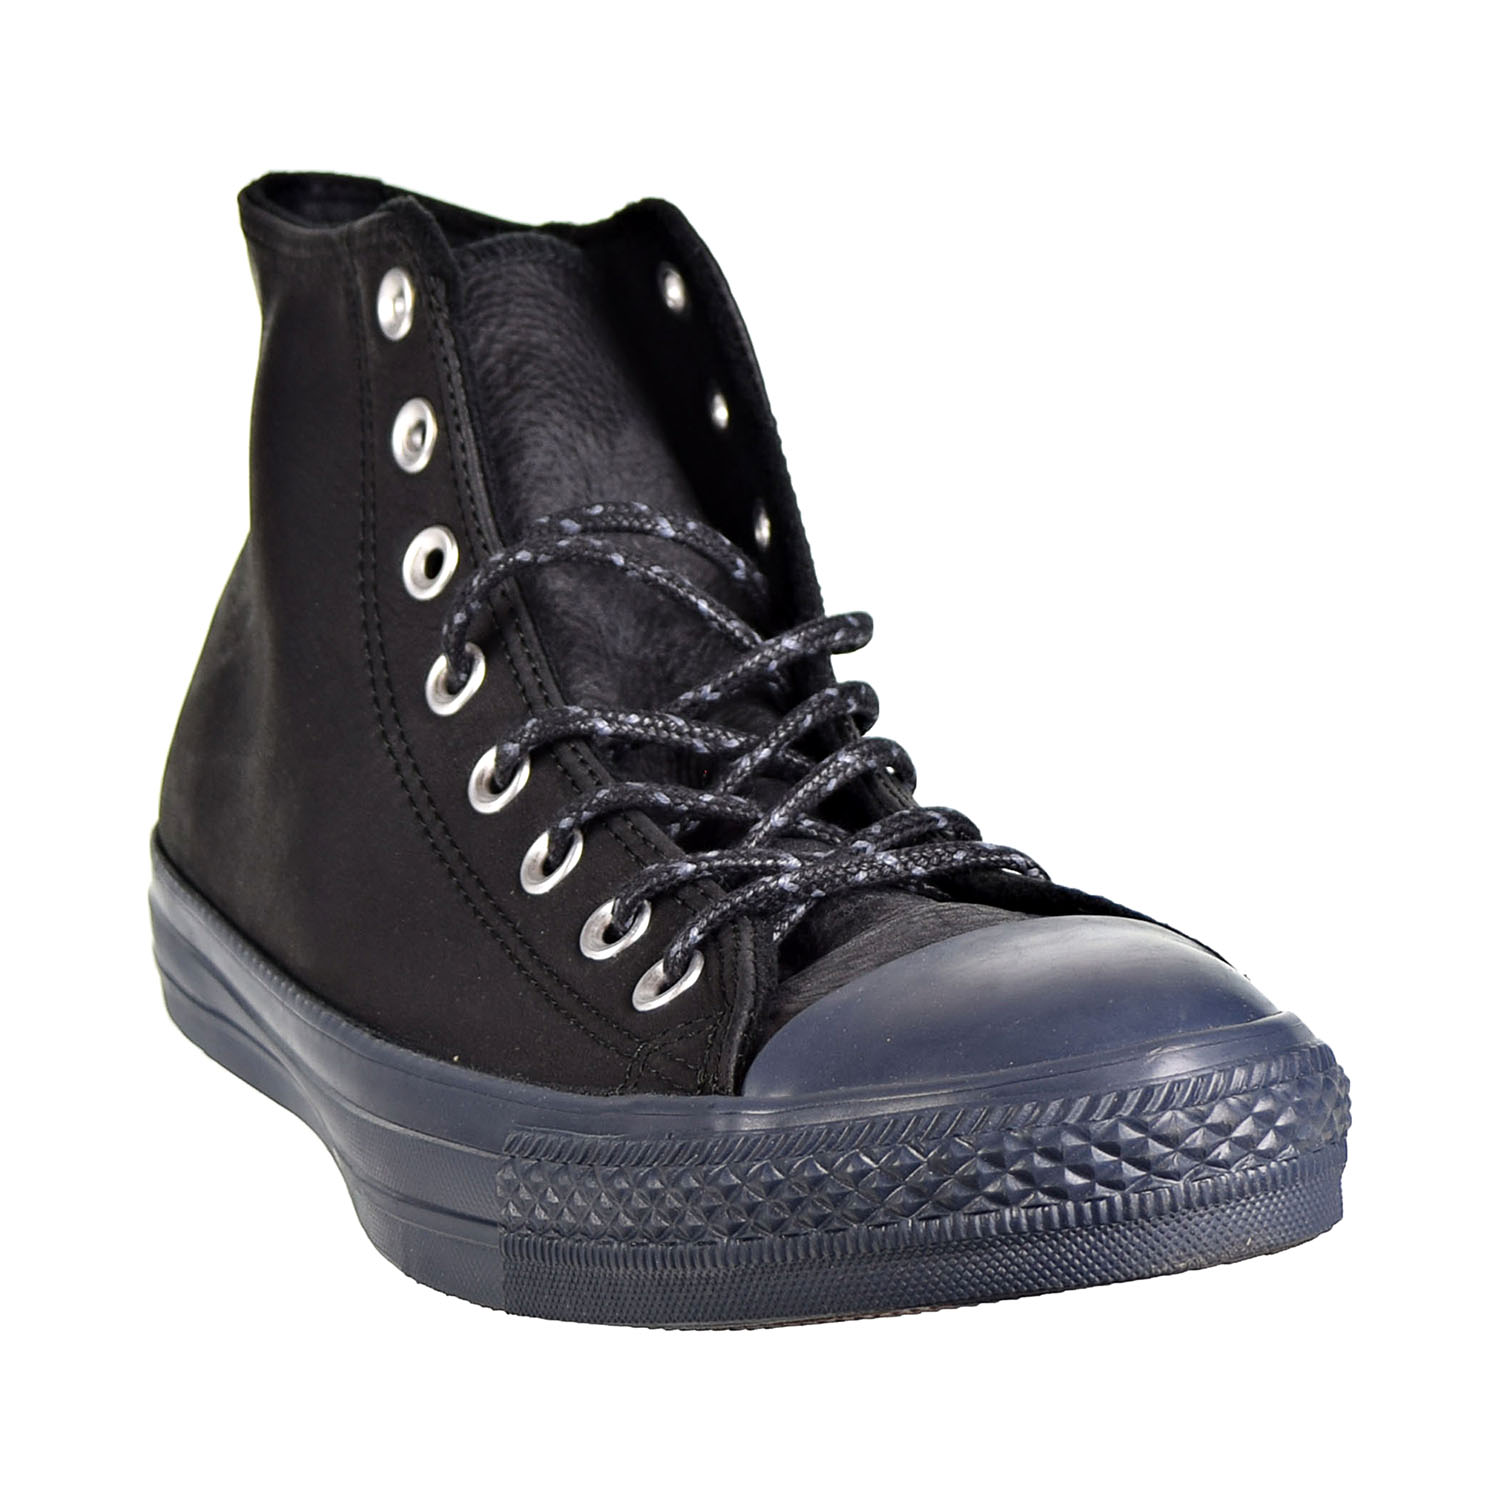 Converse Chuck Taylor All Star Hi Thermal Men's Shoes Black-Sharkskin 157514c - image 2 of 6